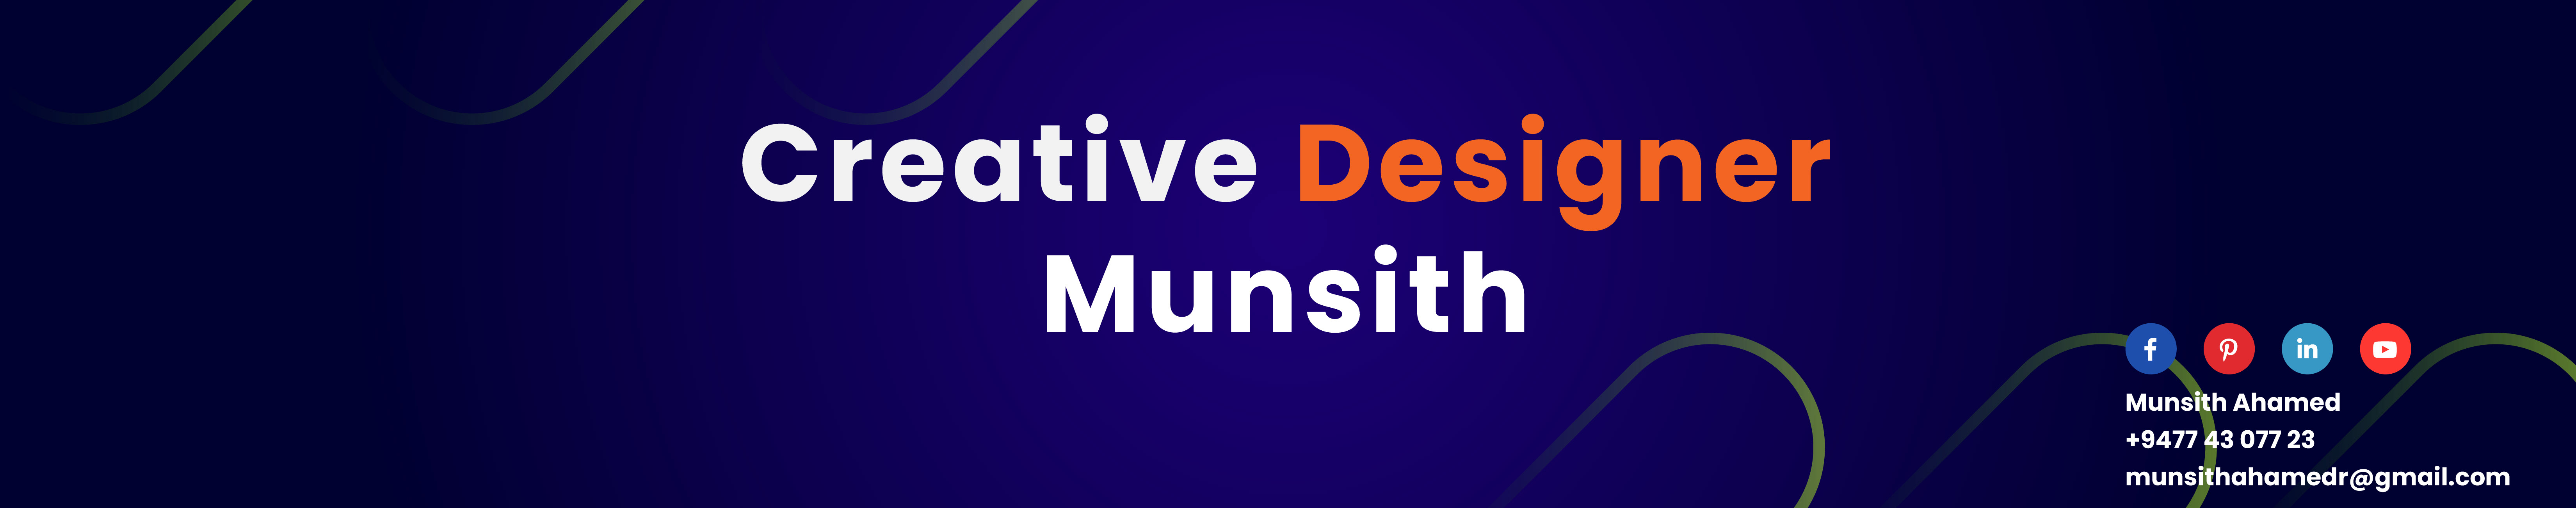 Munsith Ahamed's profile banner